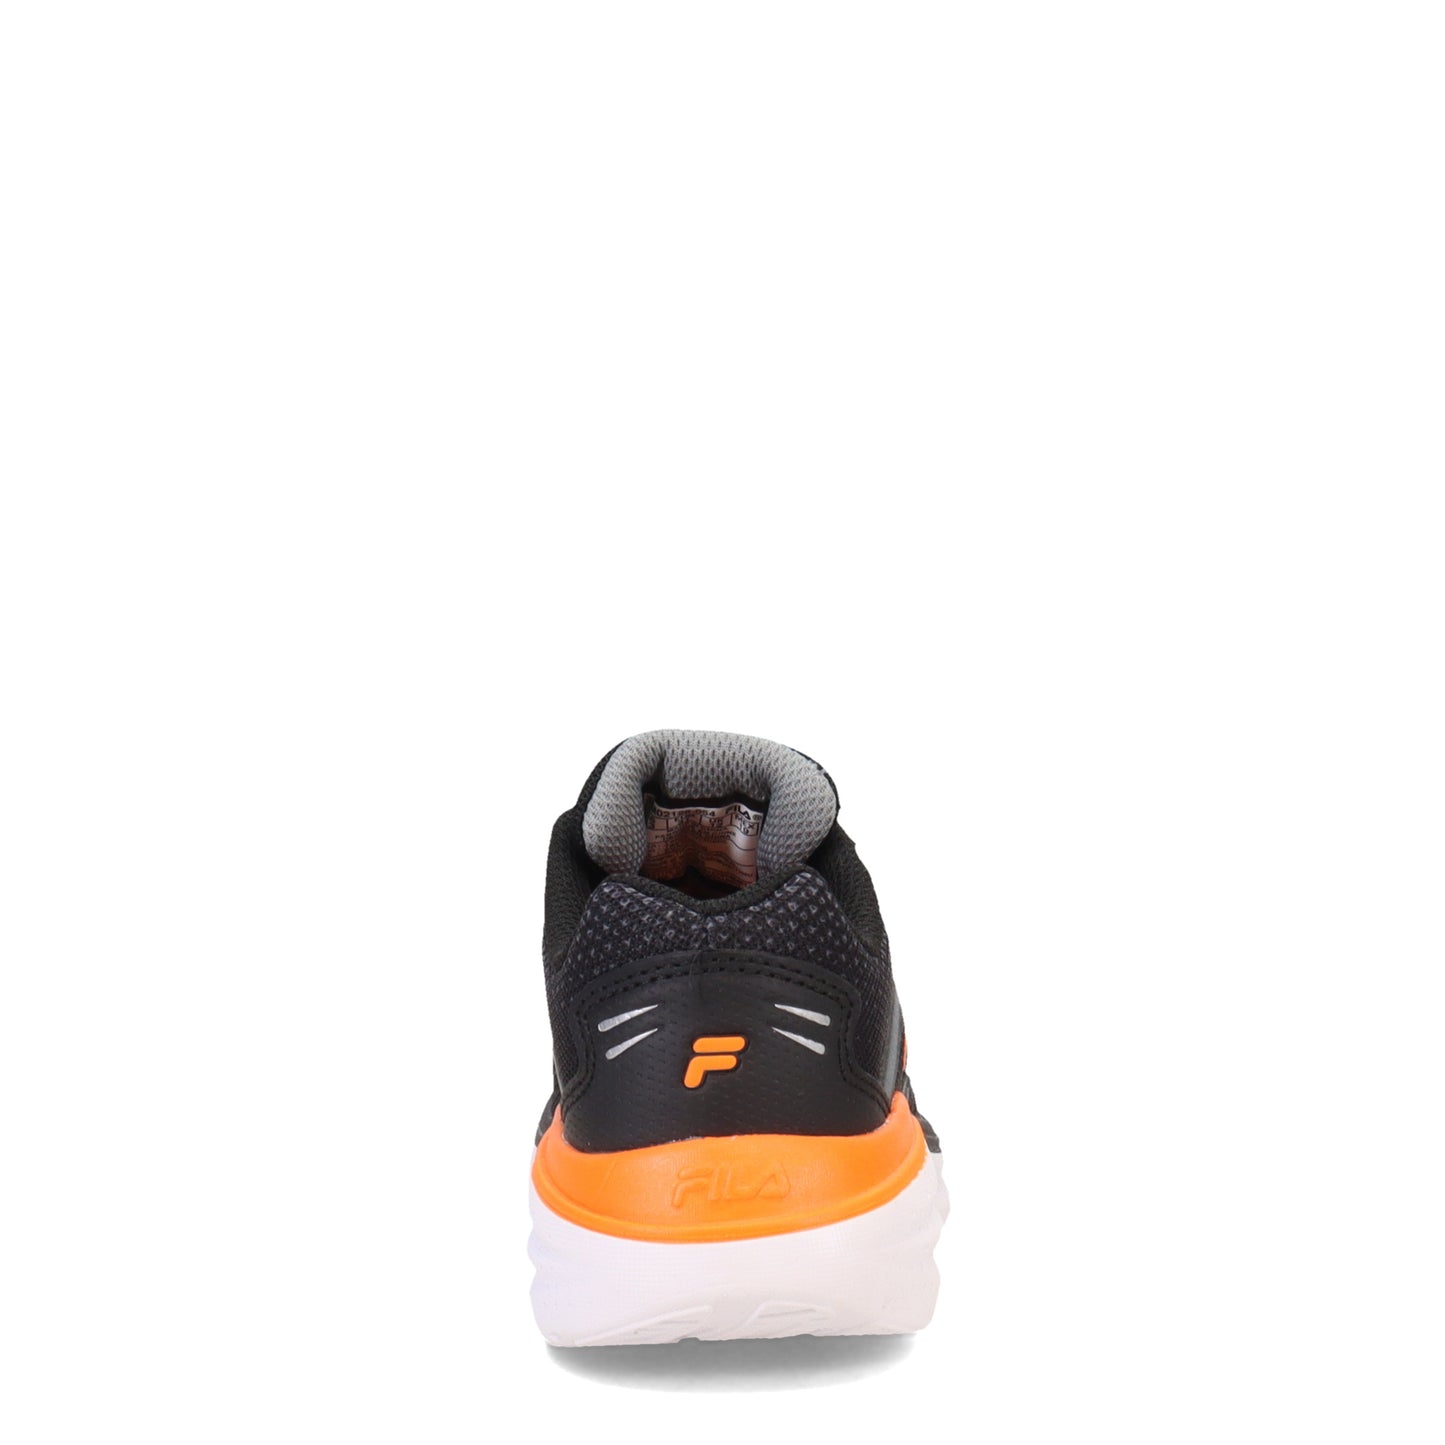 Peltz Shoes  Boy's Fila Profound 2 Sneaker - Little Kid & Big Kid BLACK 3RM02126-054